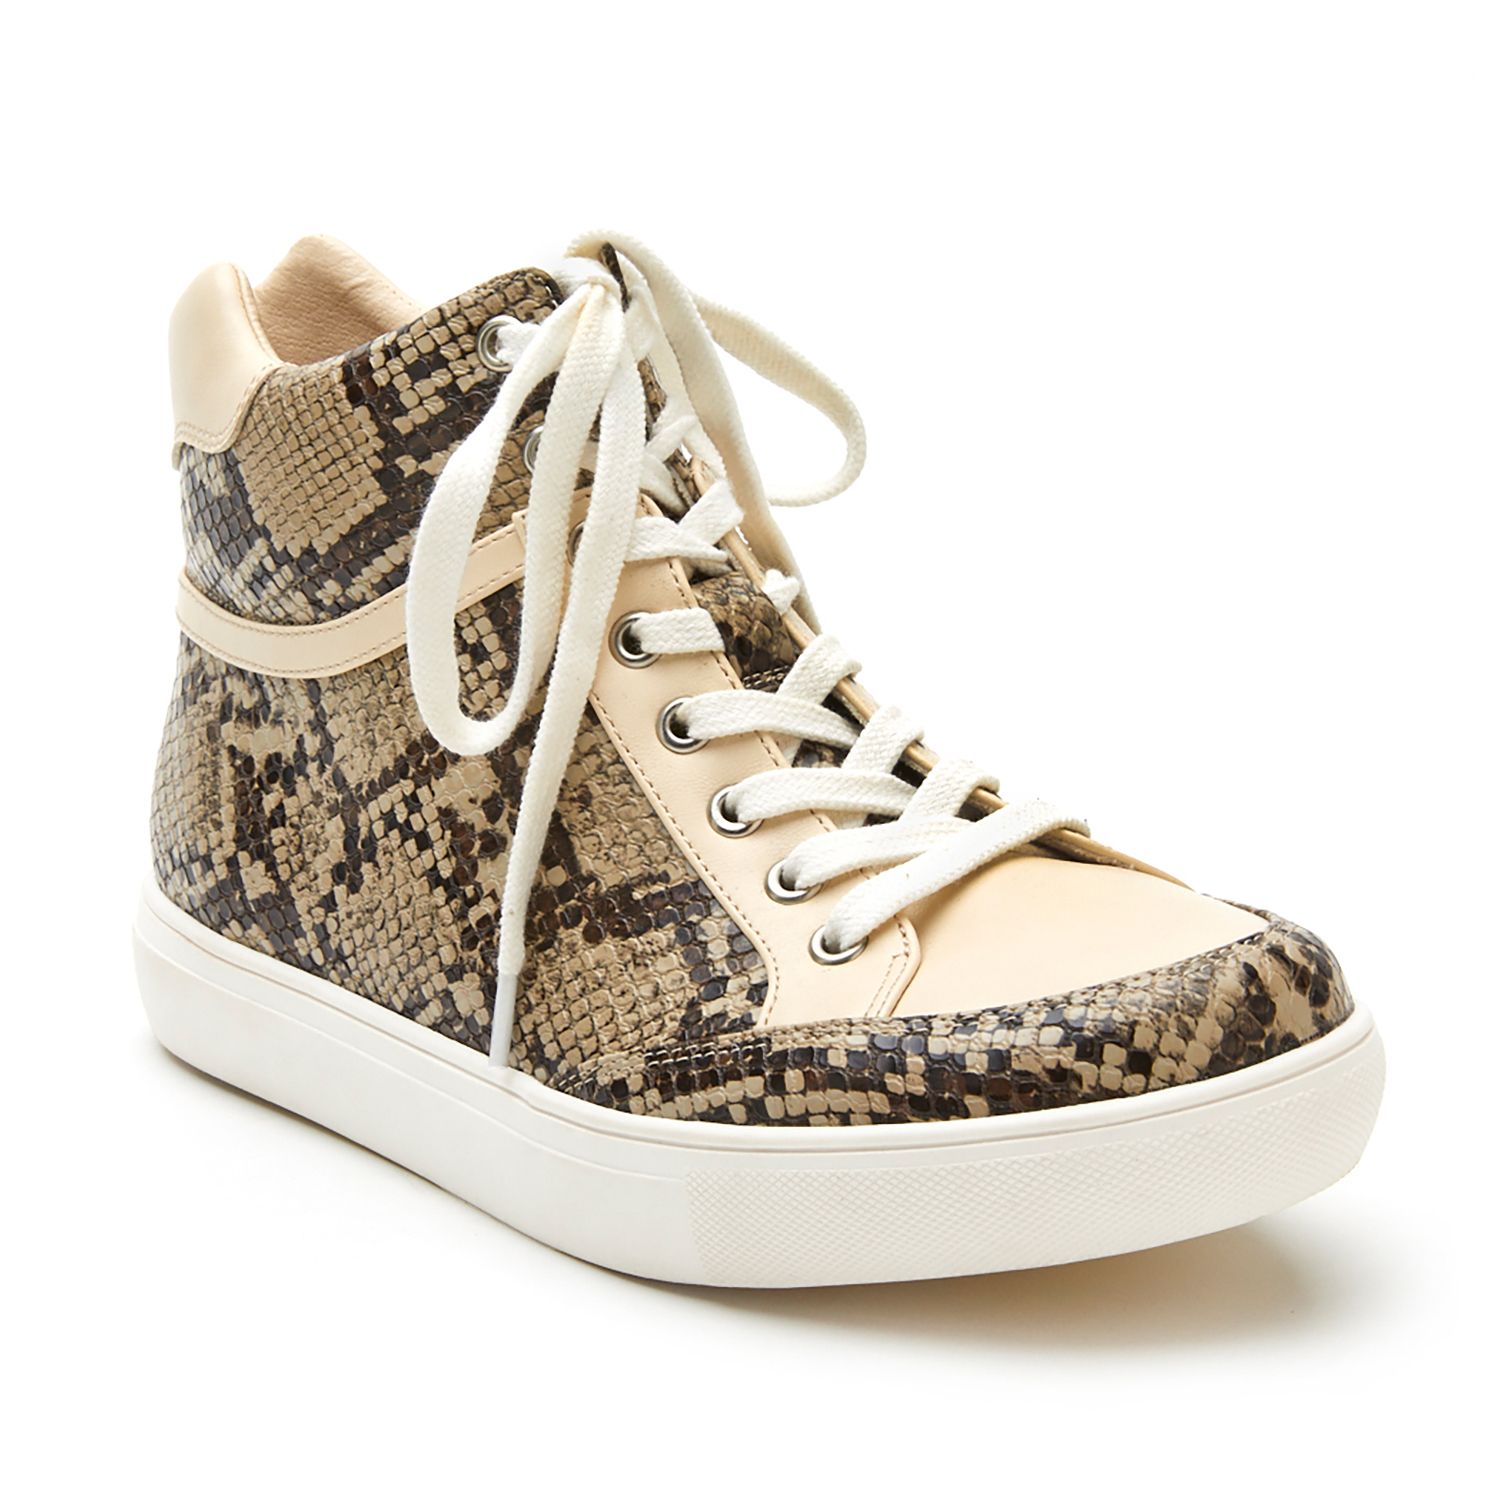 coconuts leopard sneakers